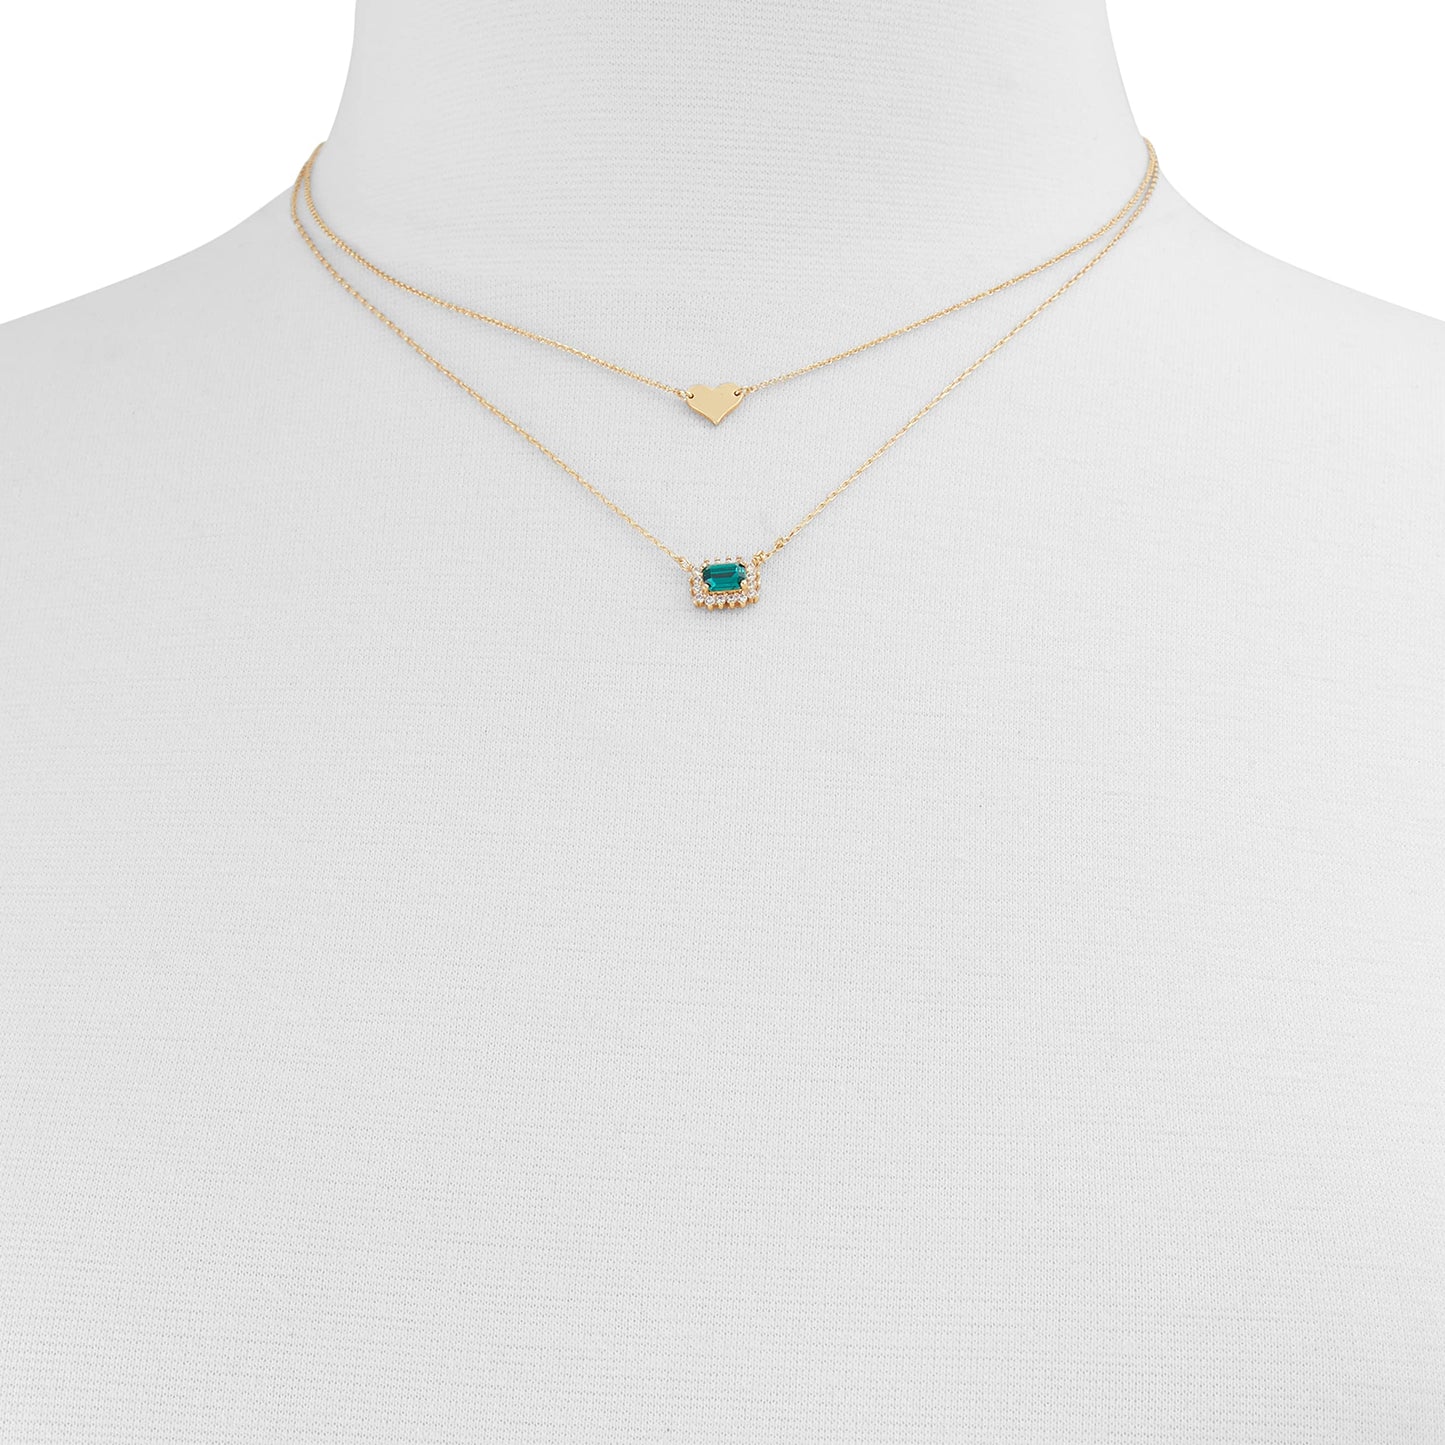 Aldo Women's Valaever Chain Necklace, Gold/Green